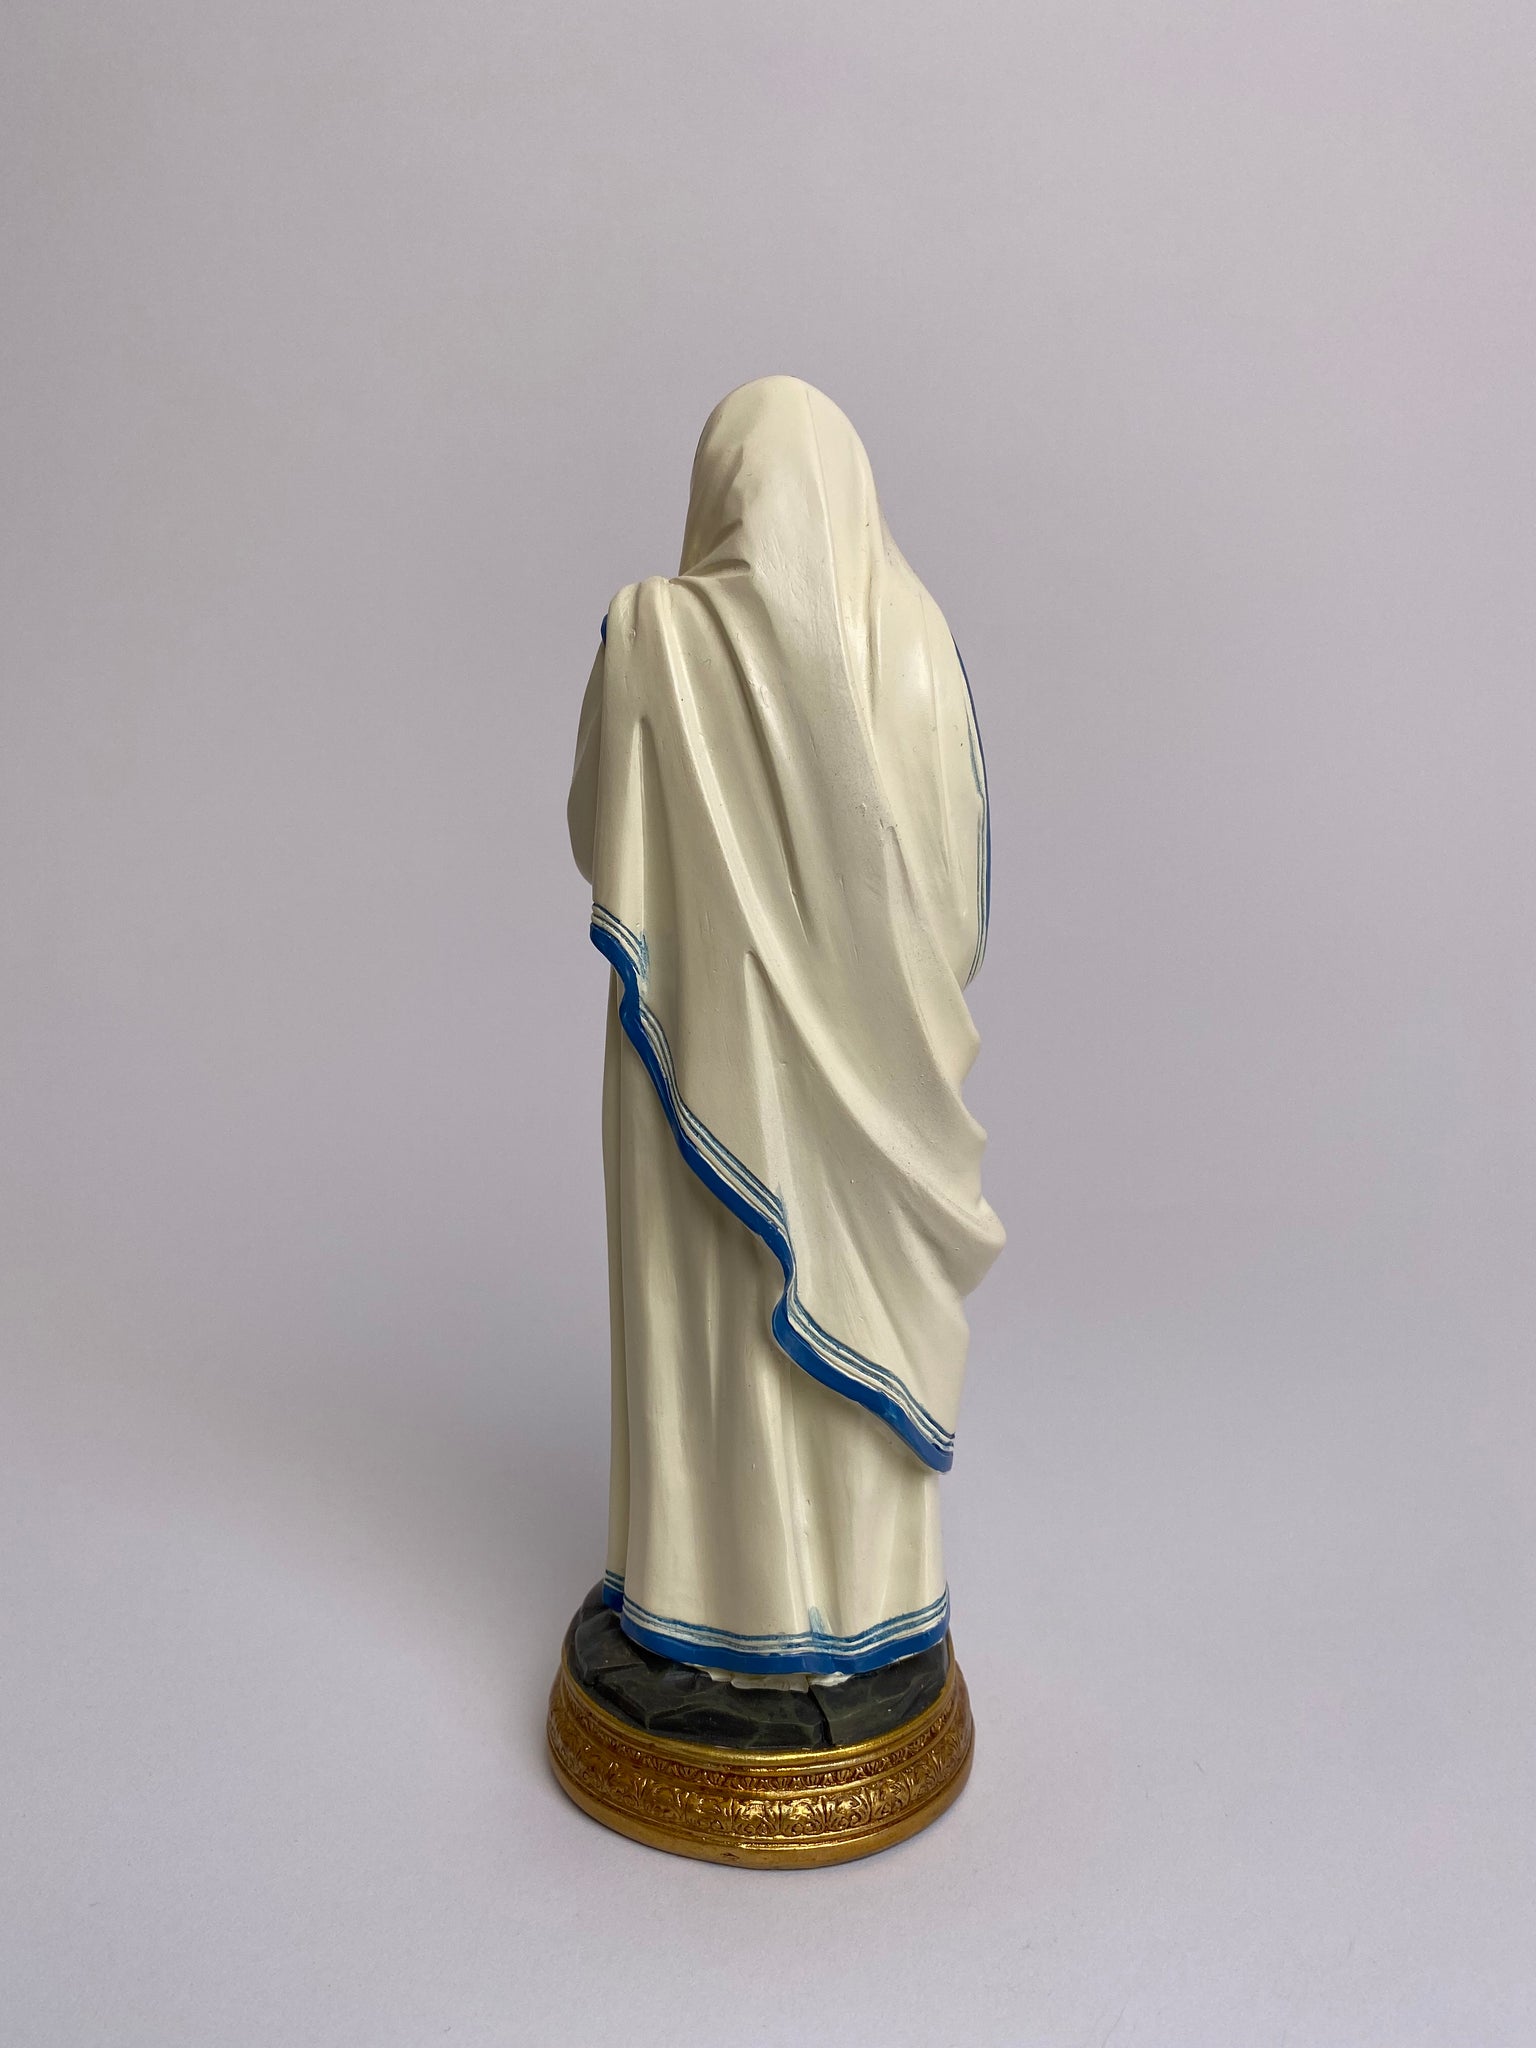 Figura Santa Teresa de Calcuta